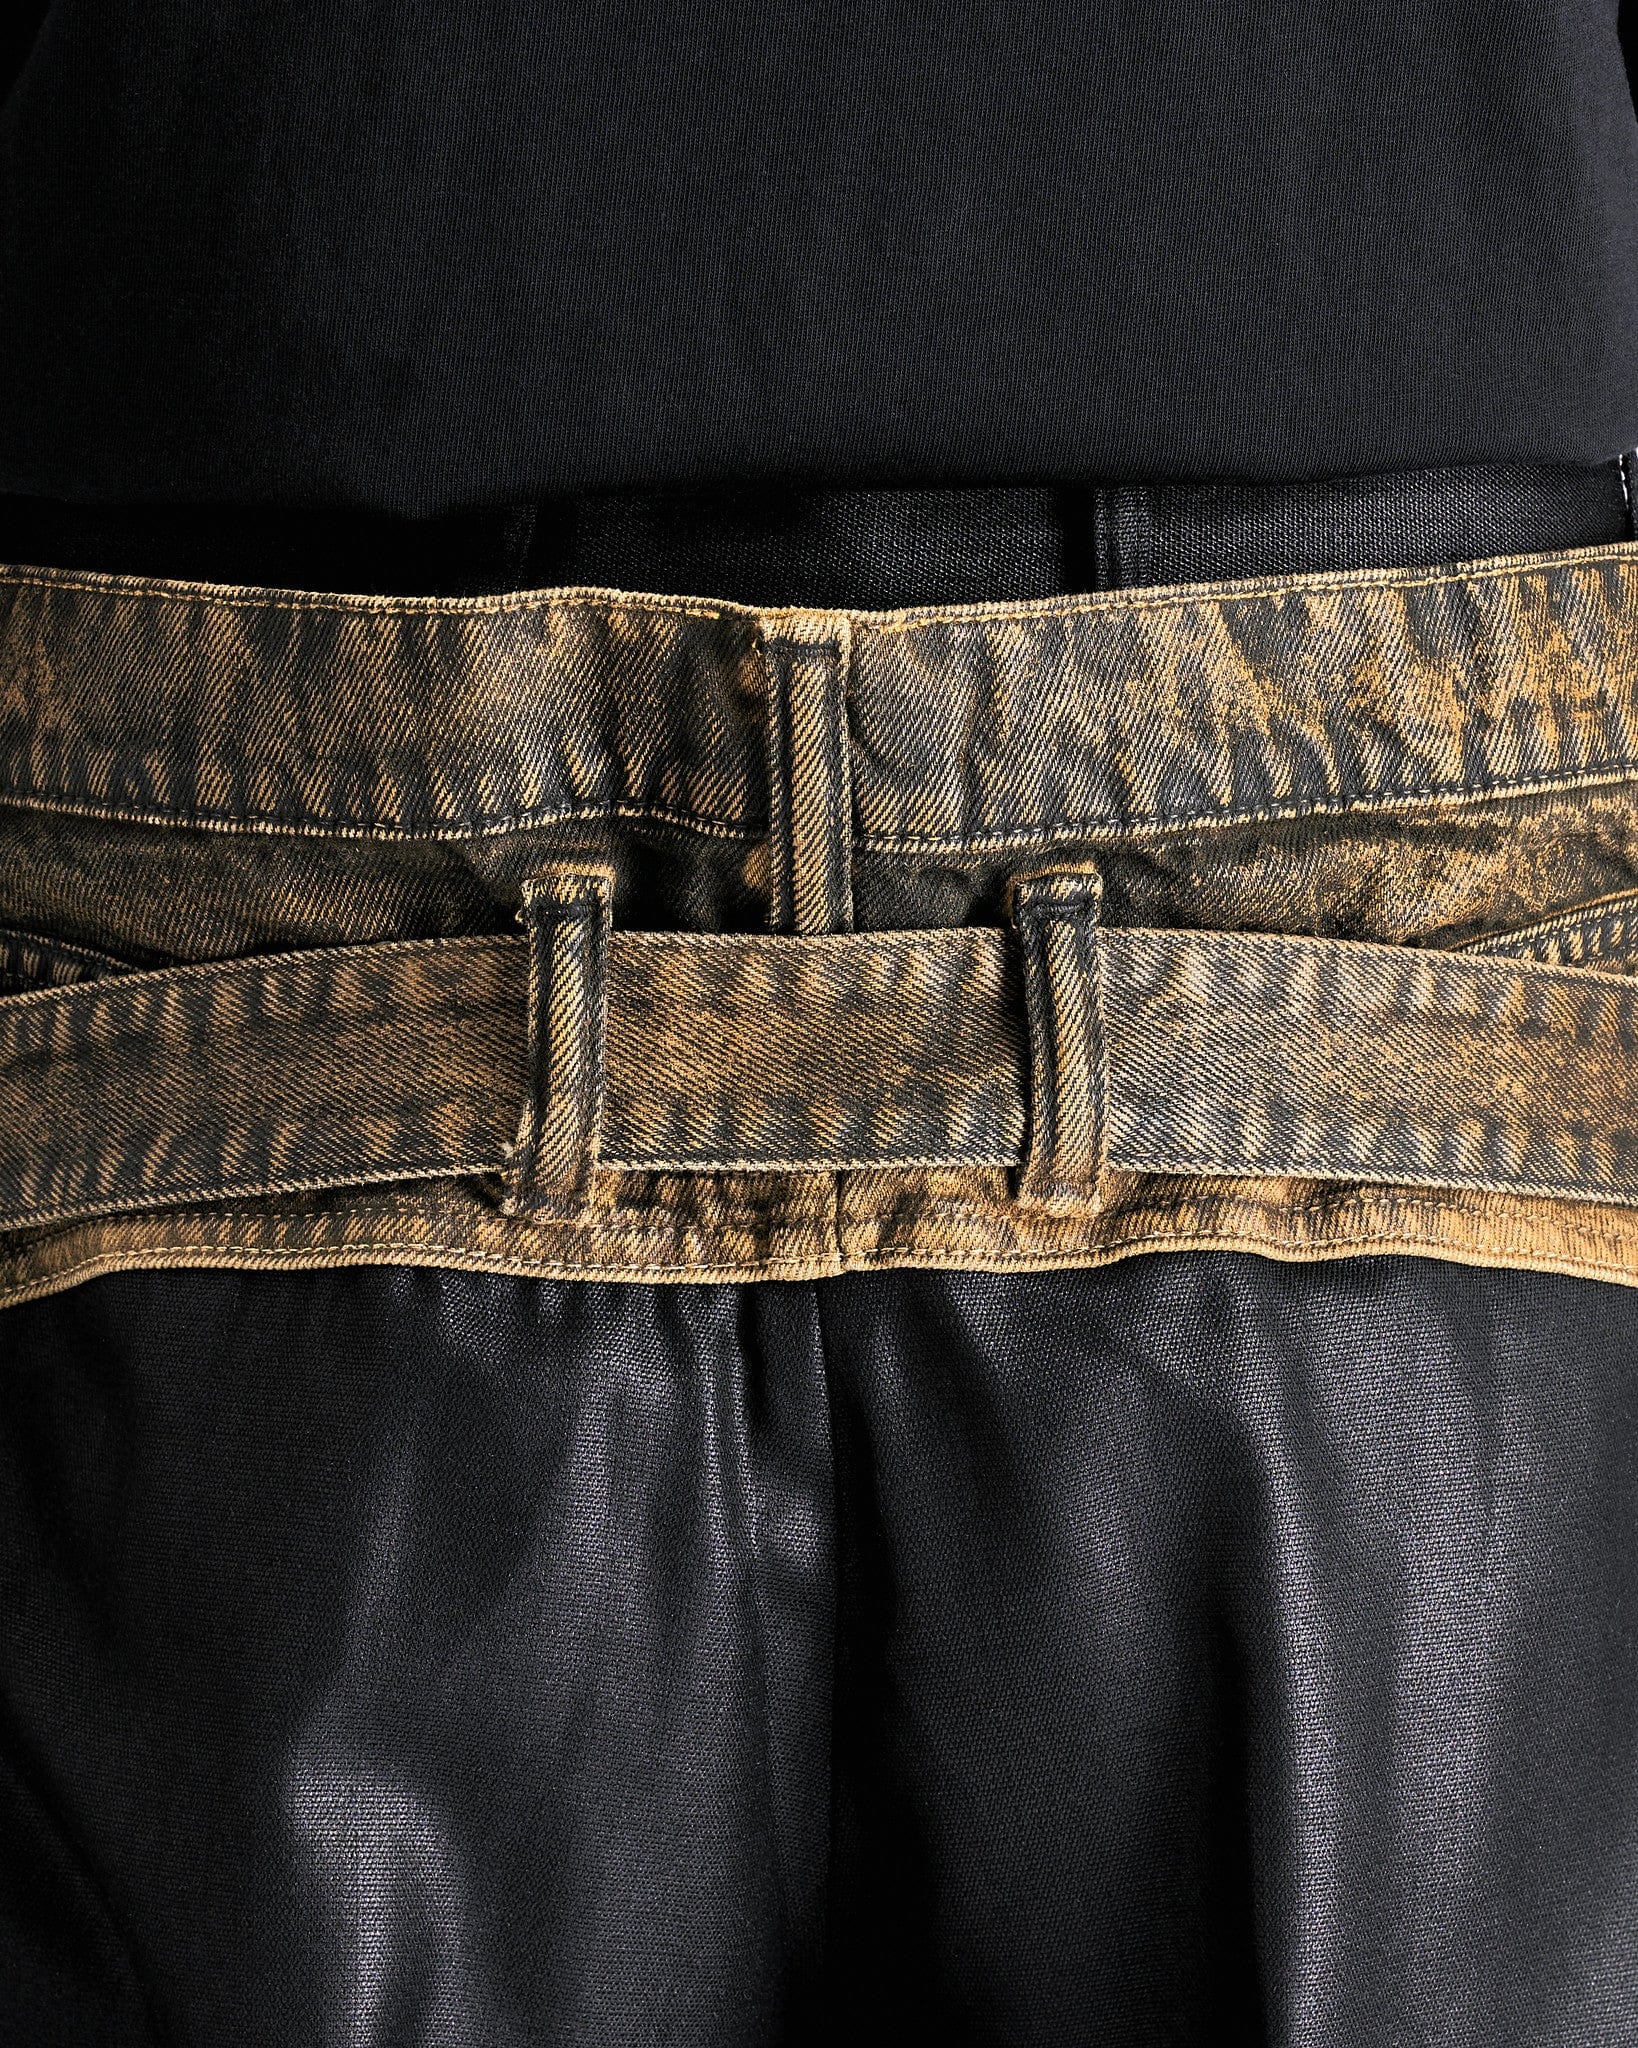 Acne Studios Men's Pants Paneled Trousers in Black/Black